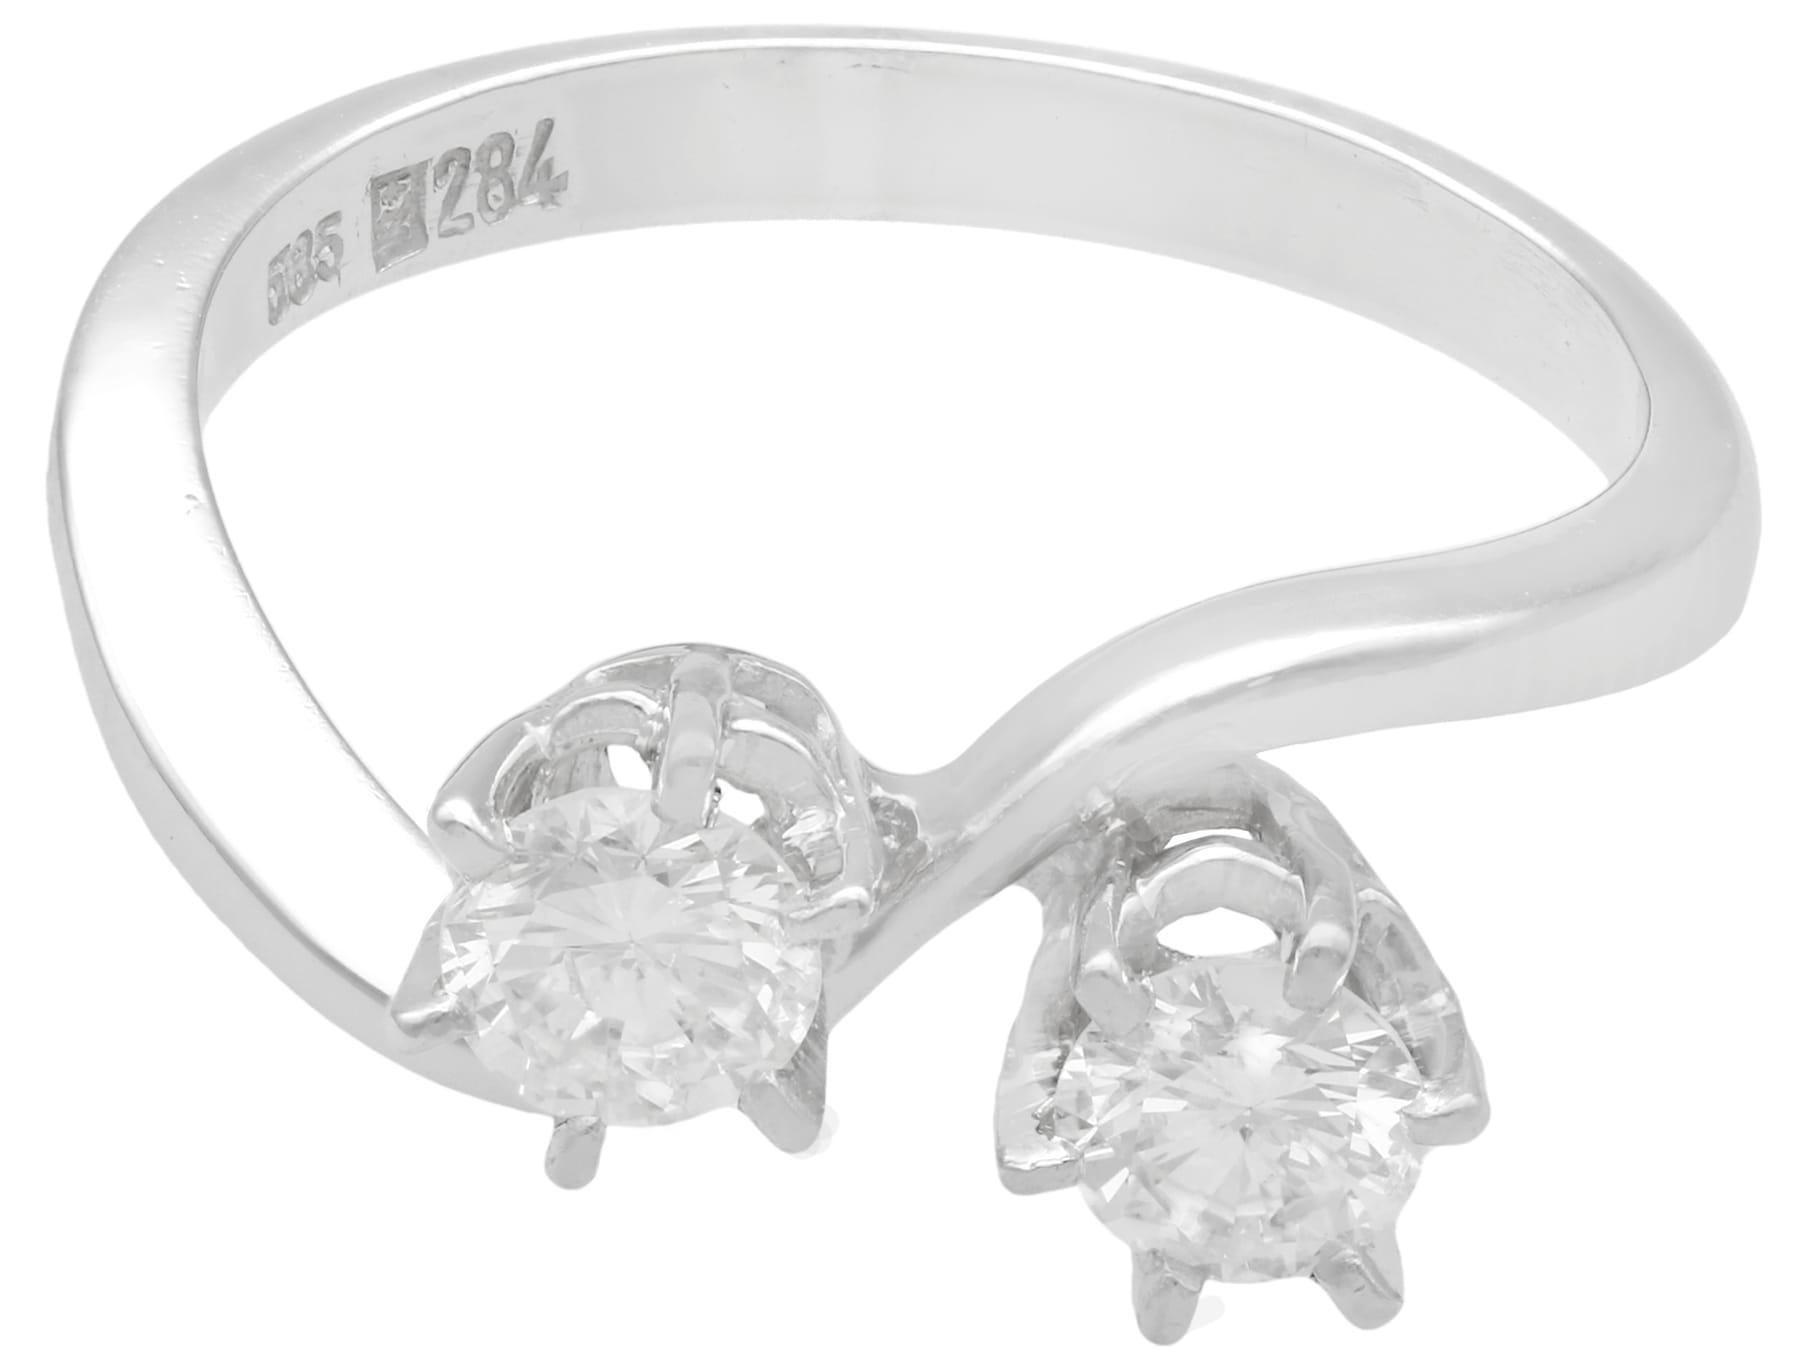 1970s diamond engagement rings